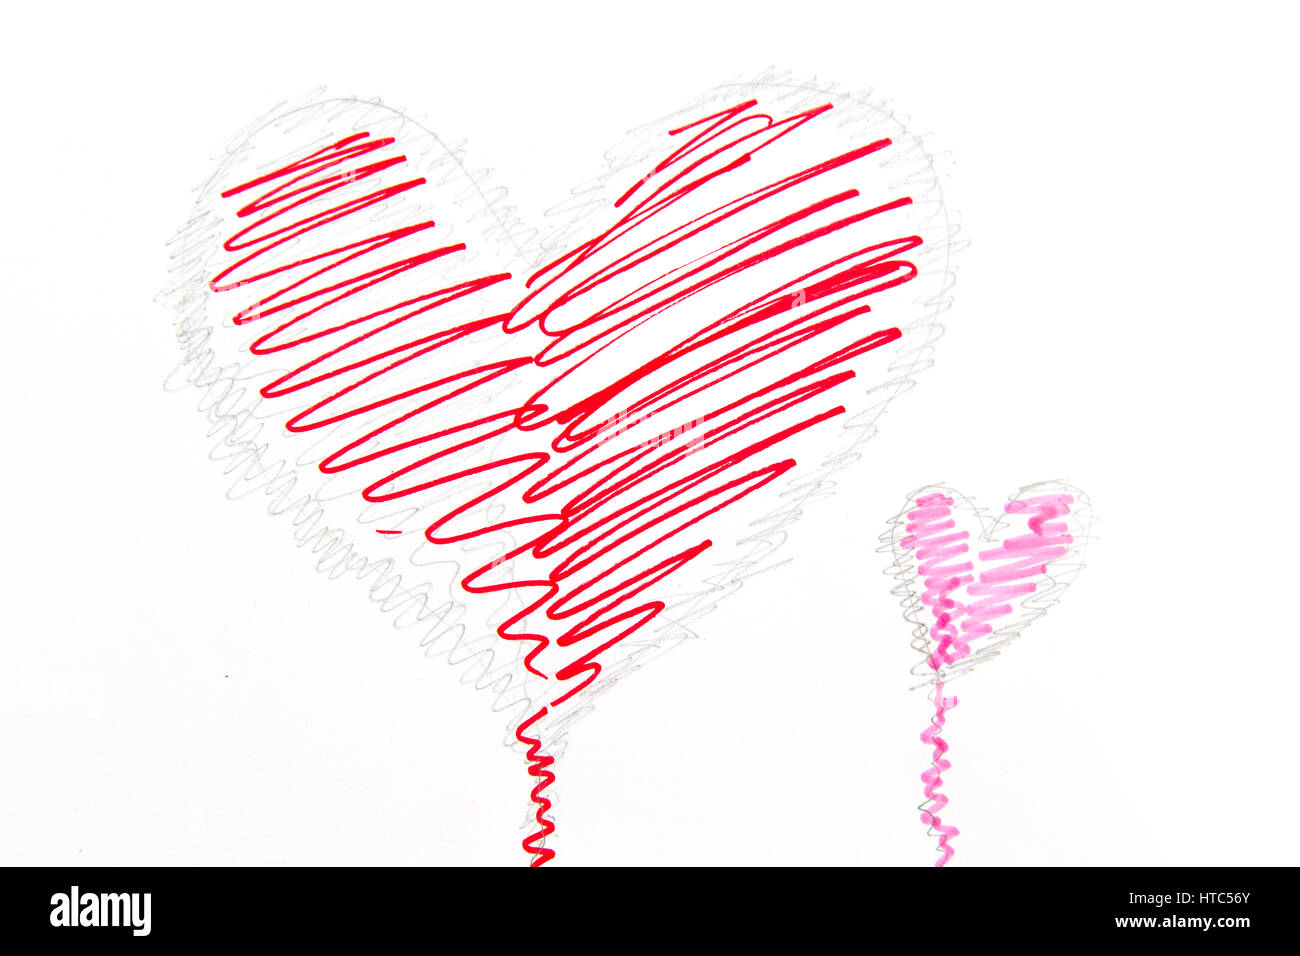 Drawing hearts shape isolated on white background. Stock Photo